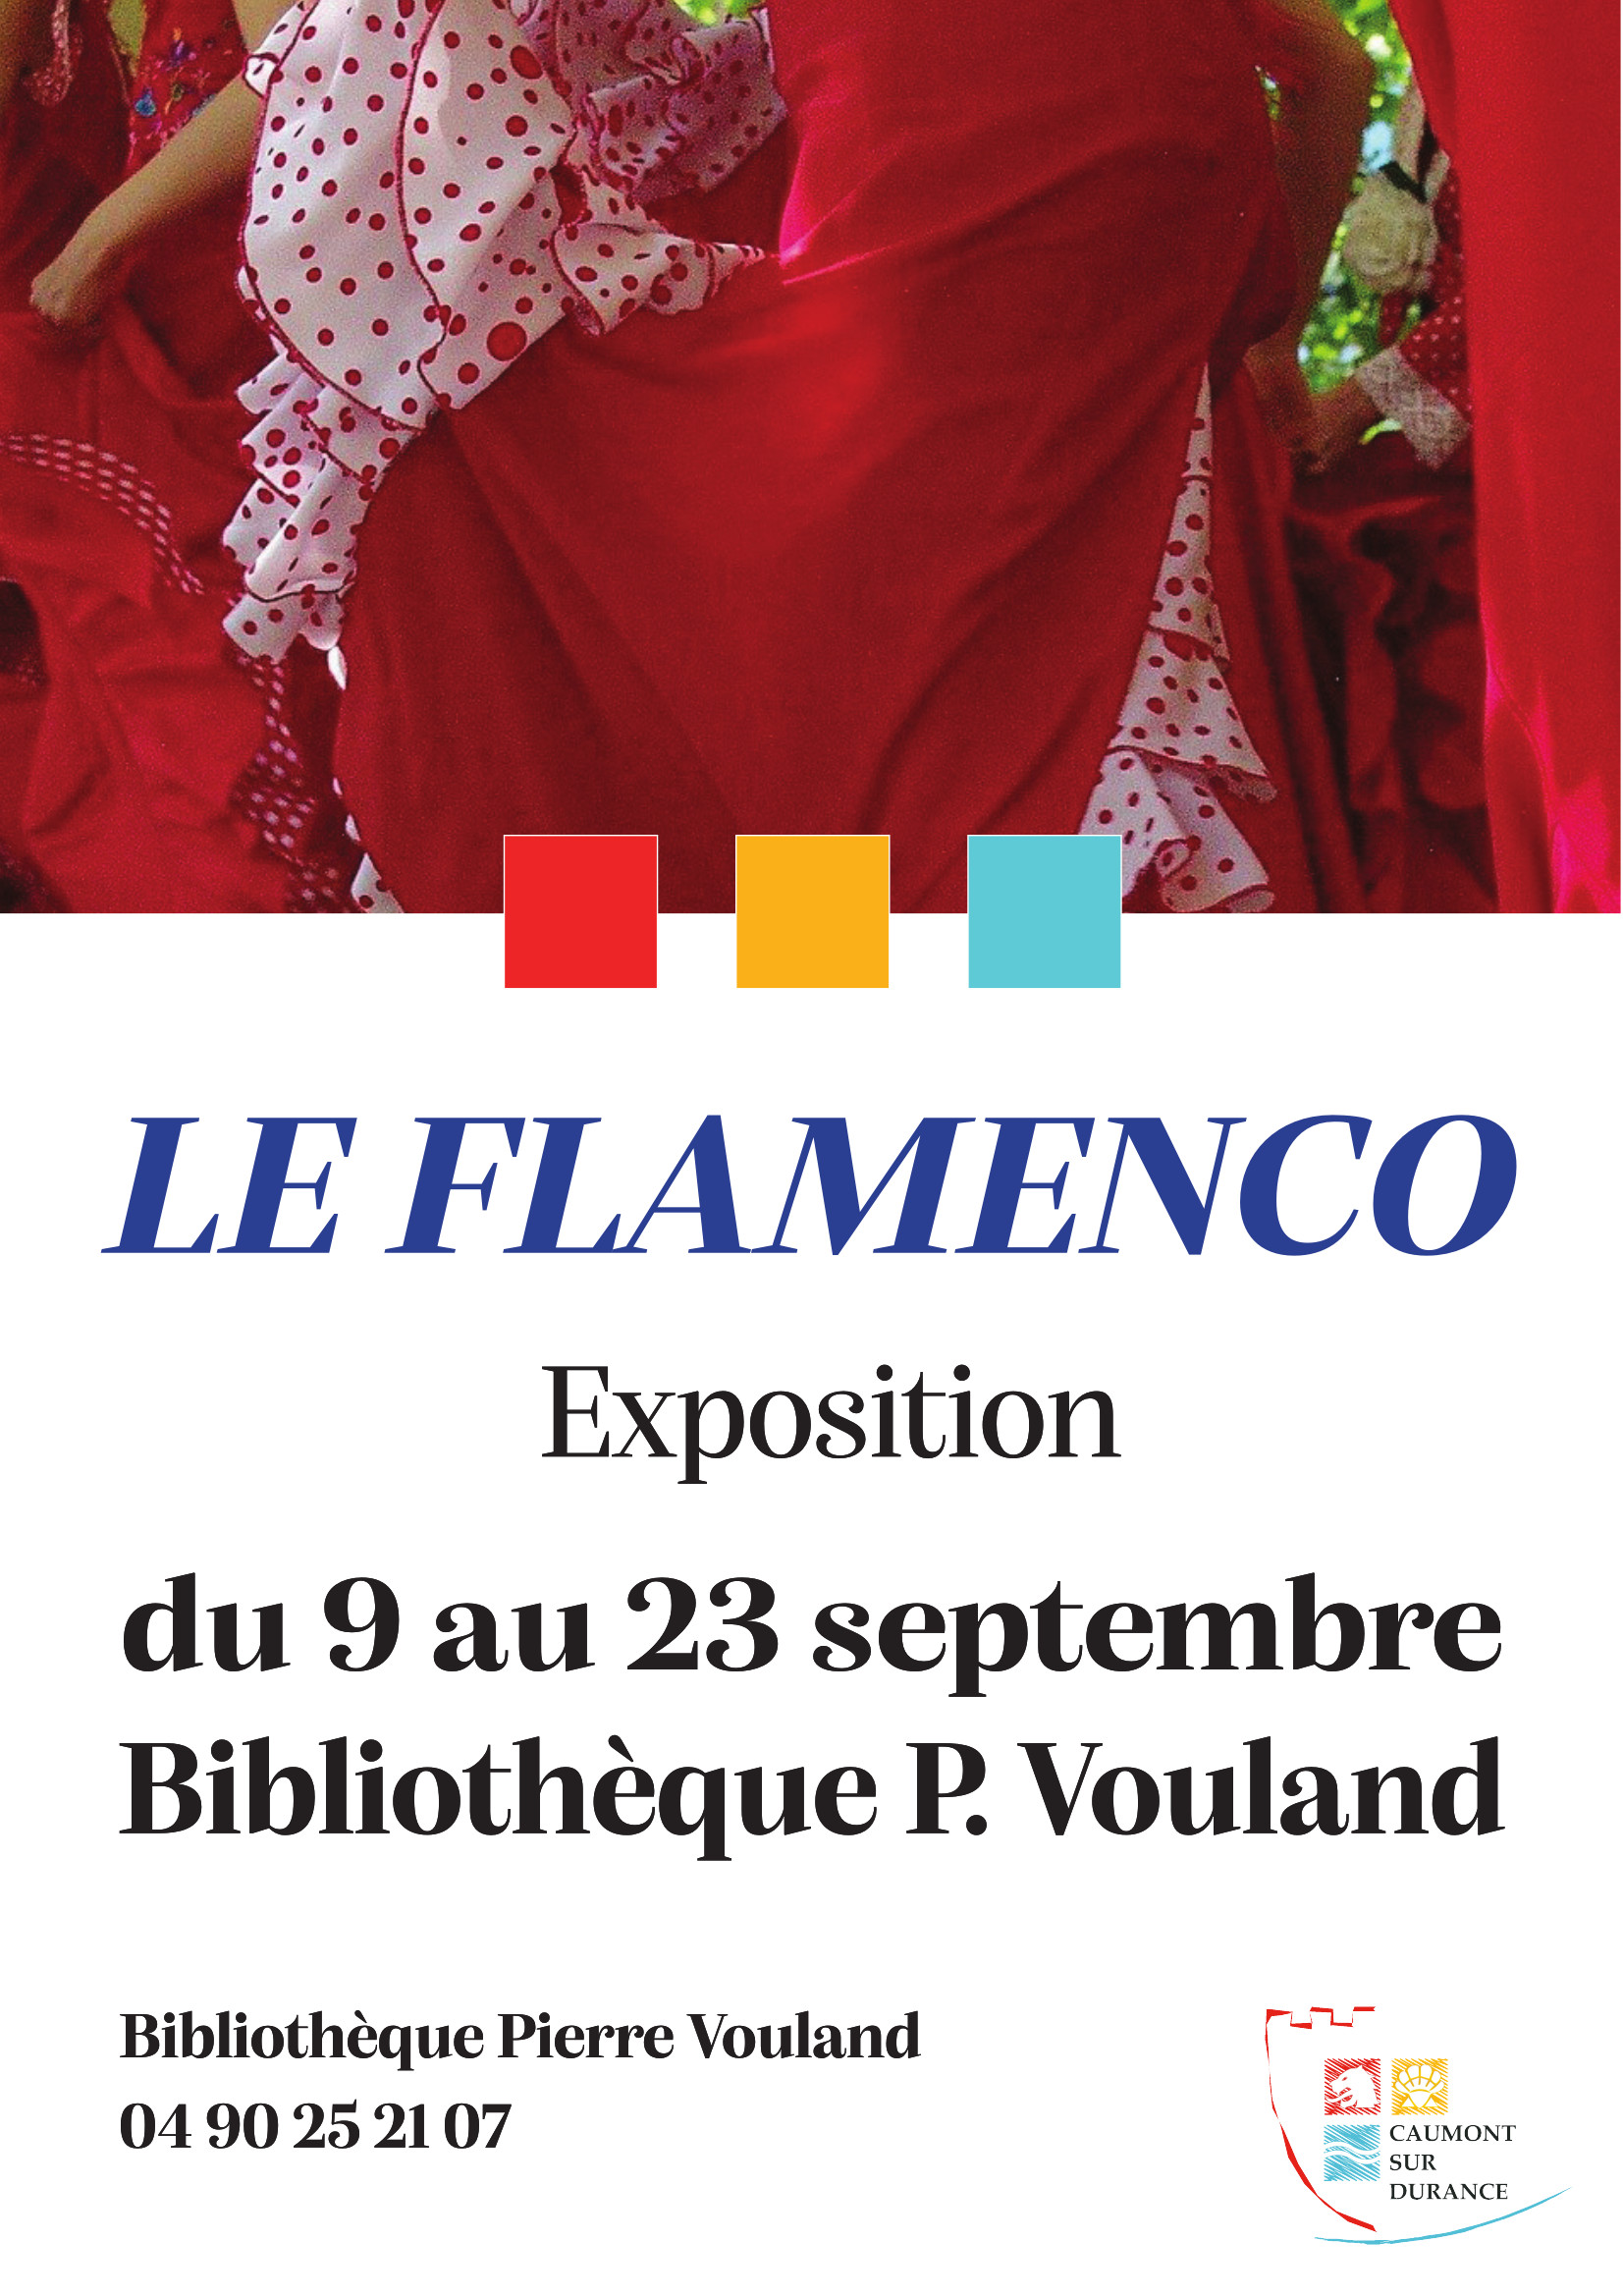 09 2021 expo flamenco